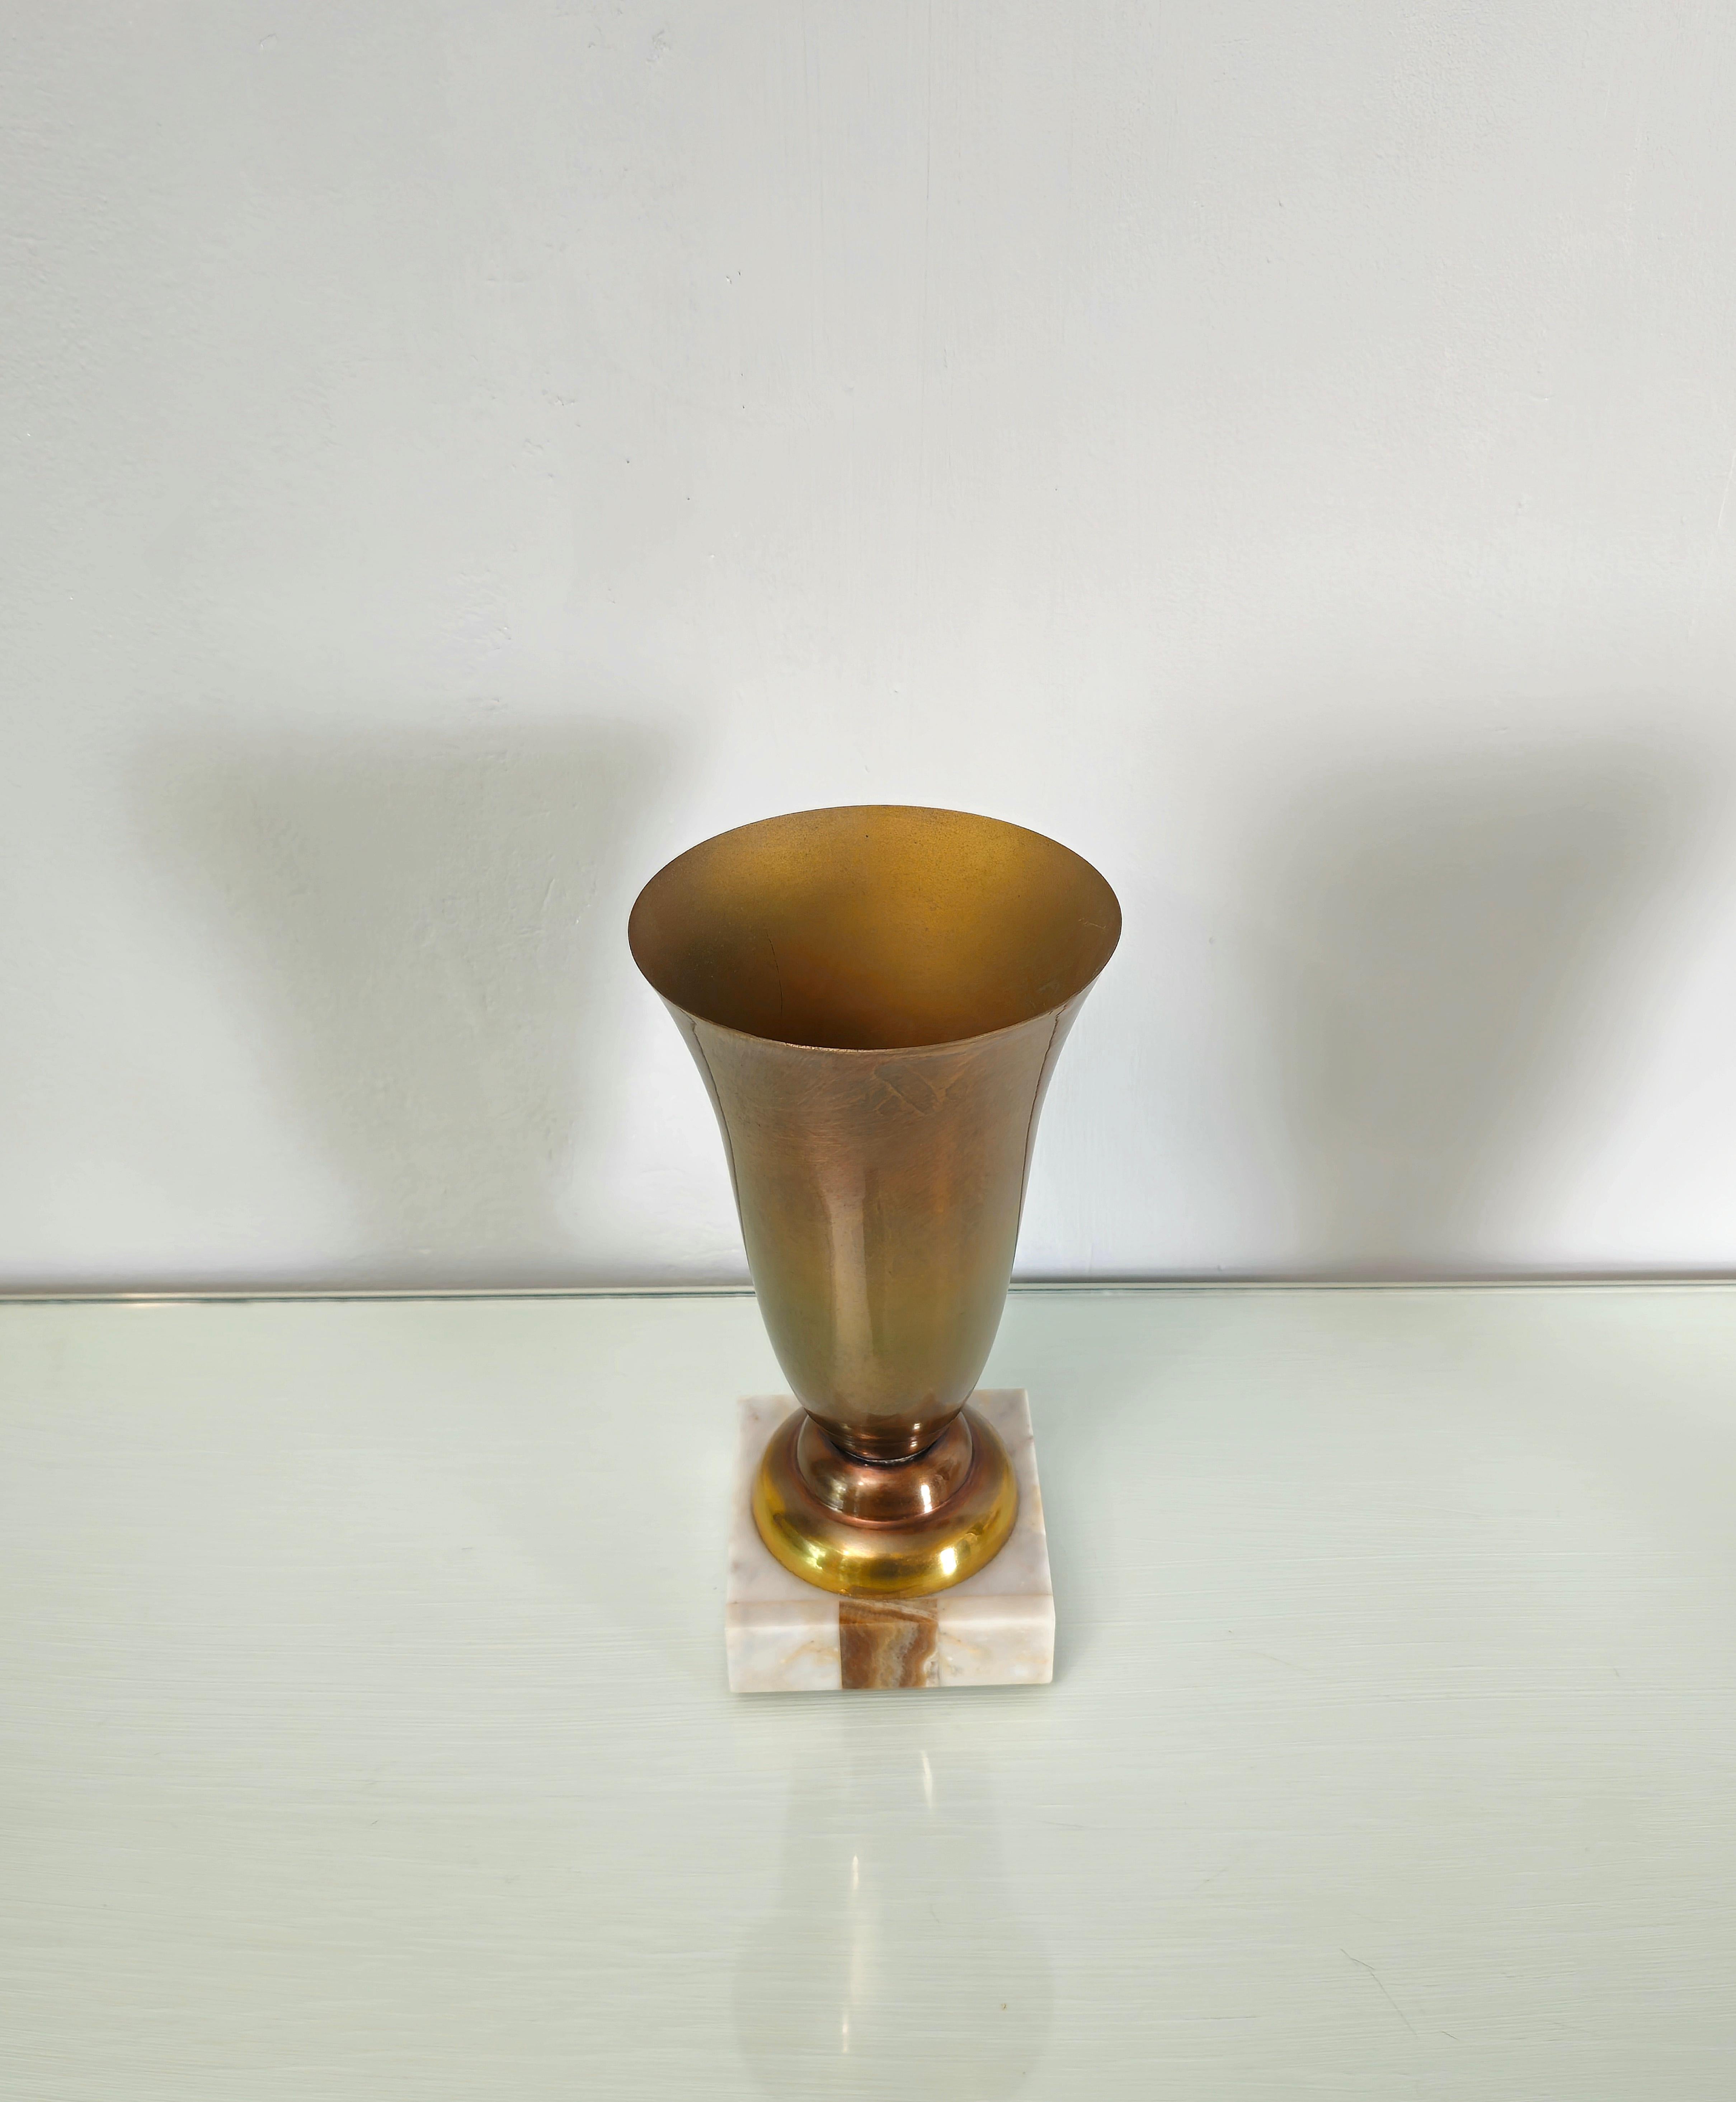 20th Century Decorative Objects Vases Aluminum Marble Midcentury Modern Italy 1960s Set of 2